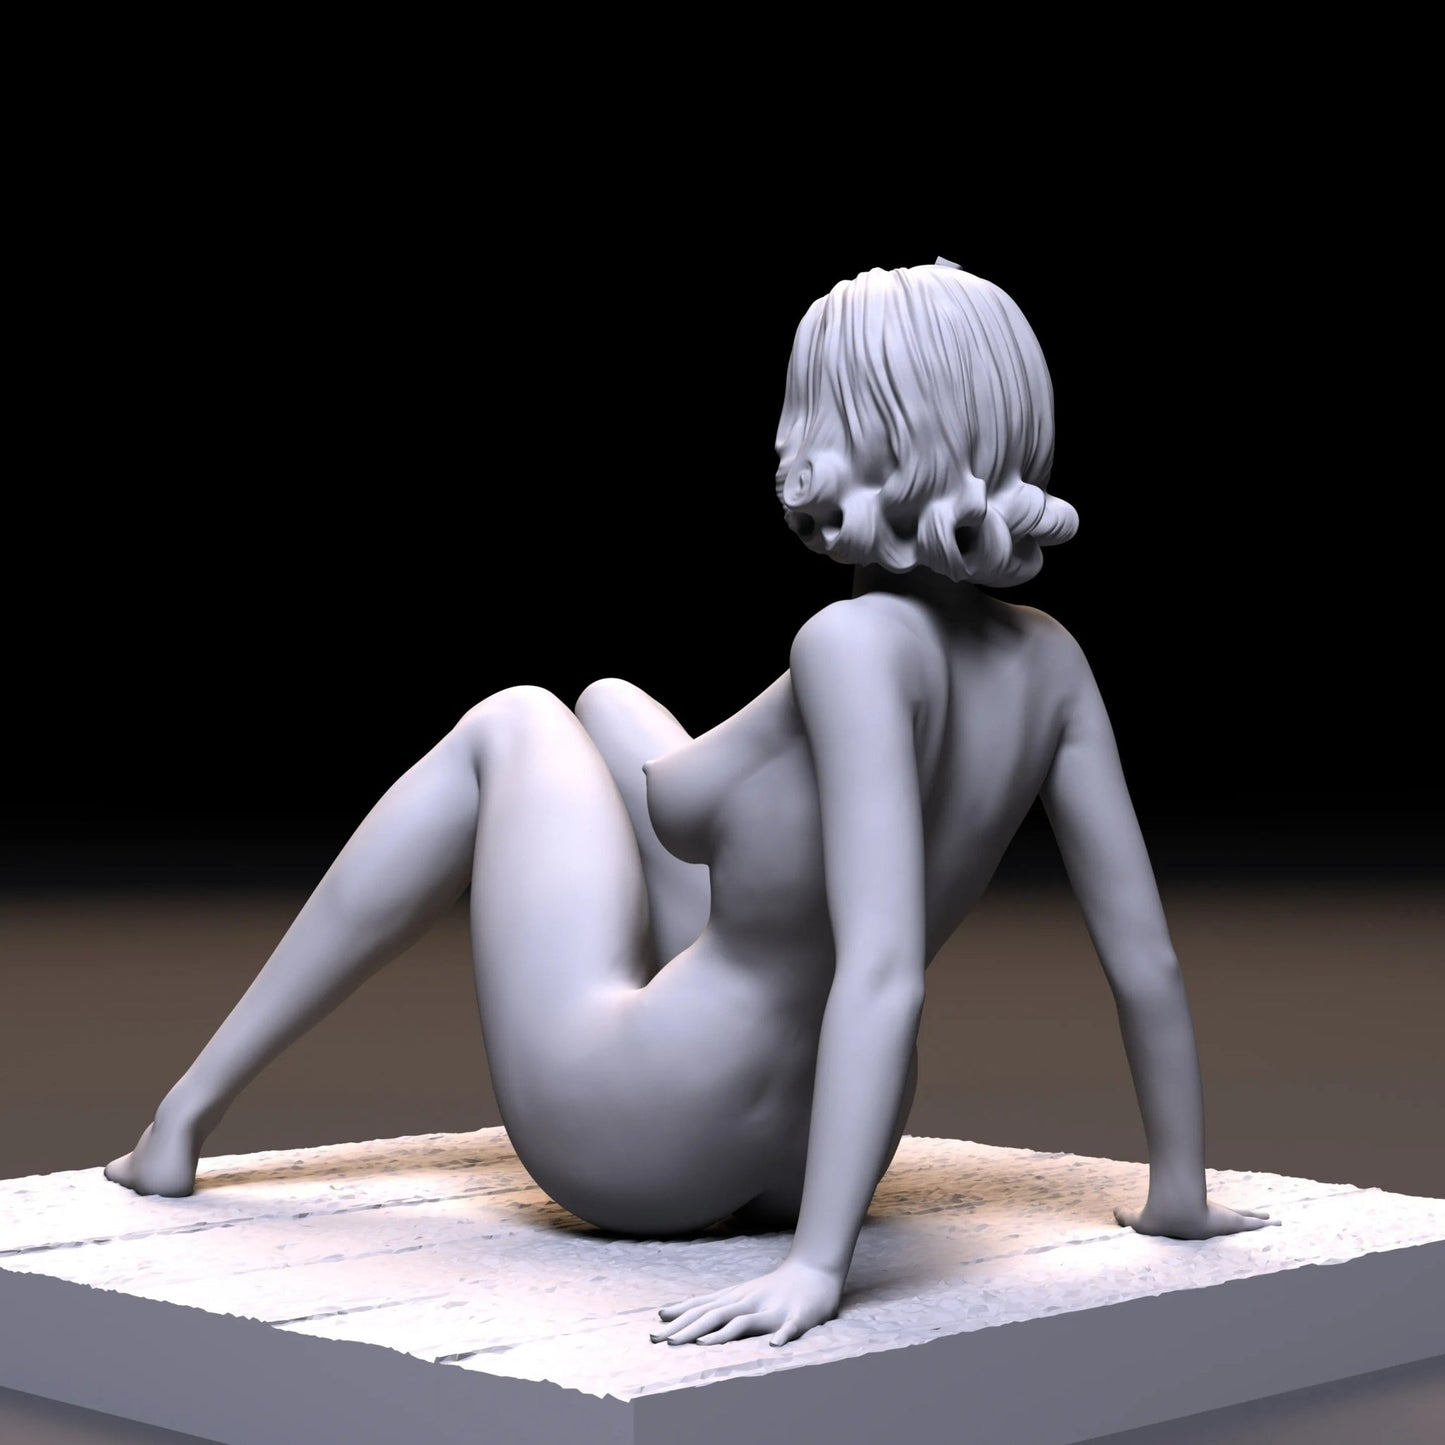 Virgin girl | 3D Printed | Bondage | Unpainted | NSFW | Figurine | Figure | Miniature | Sexy |